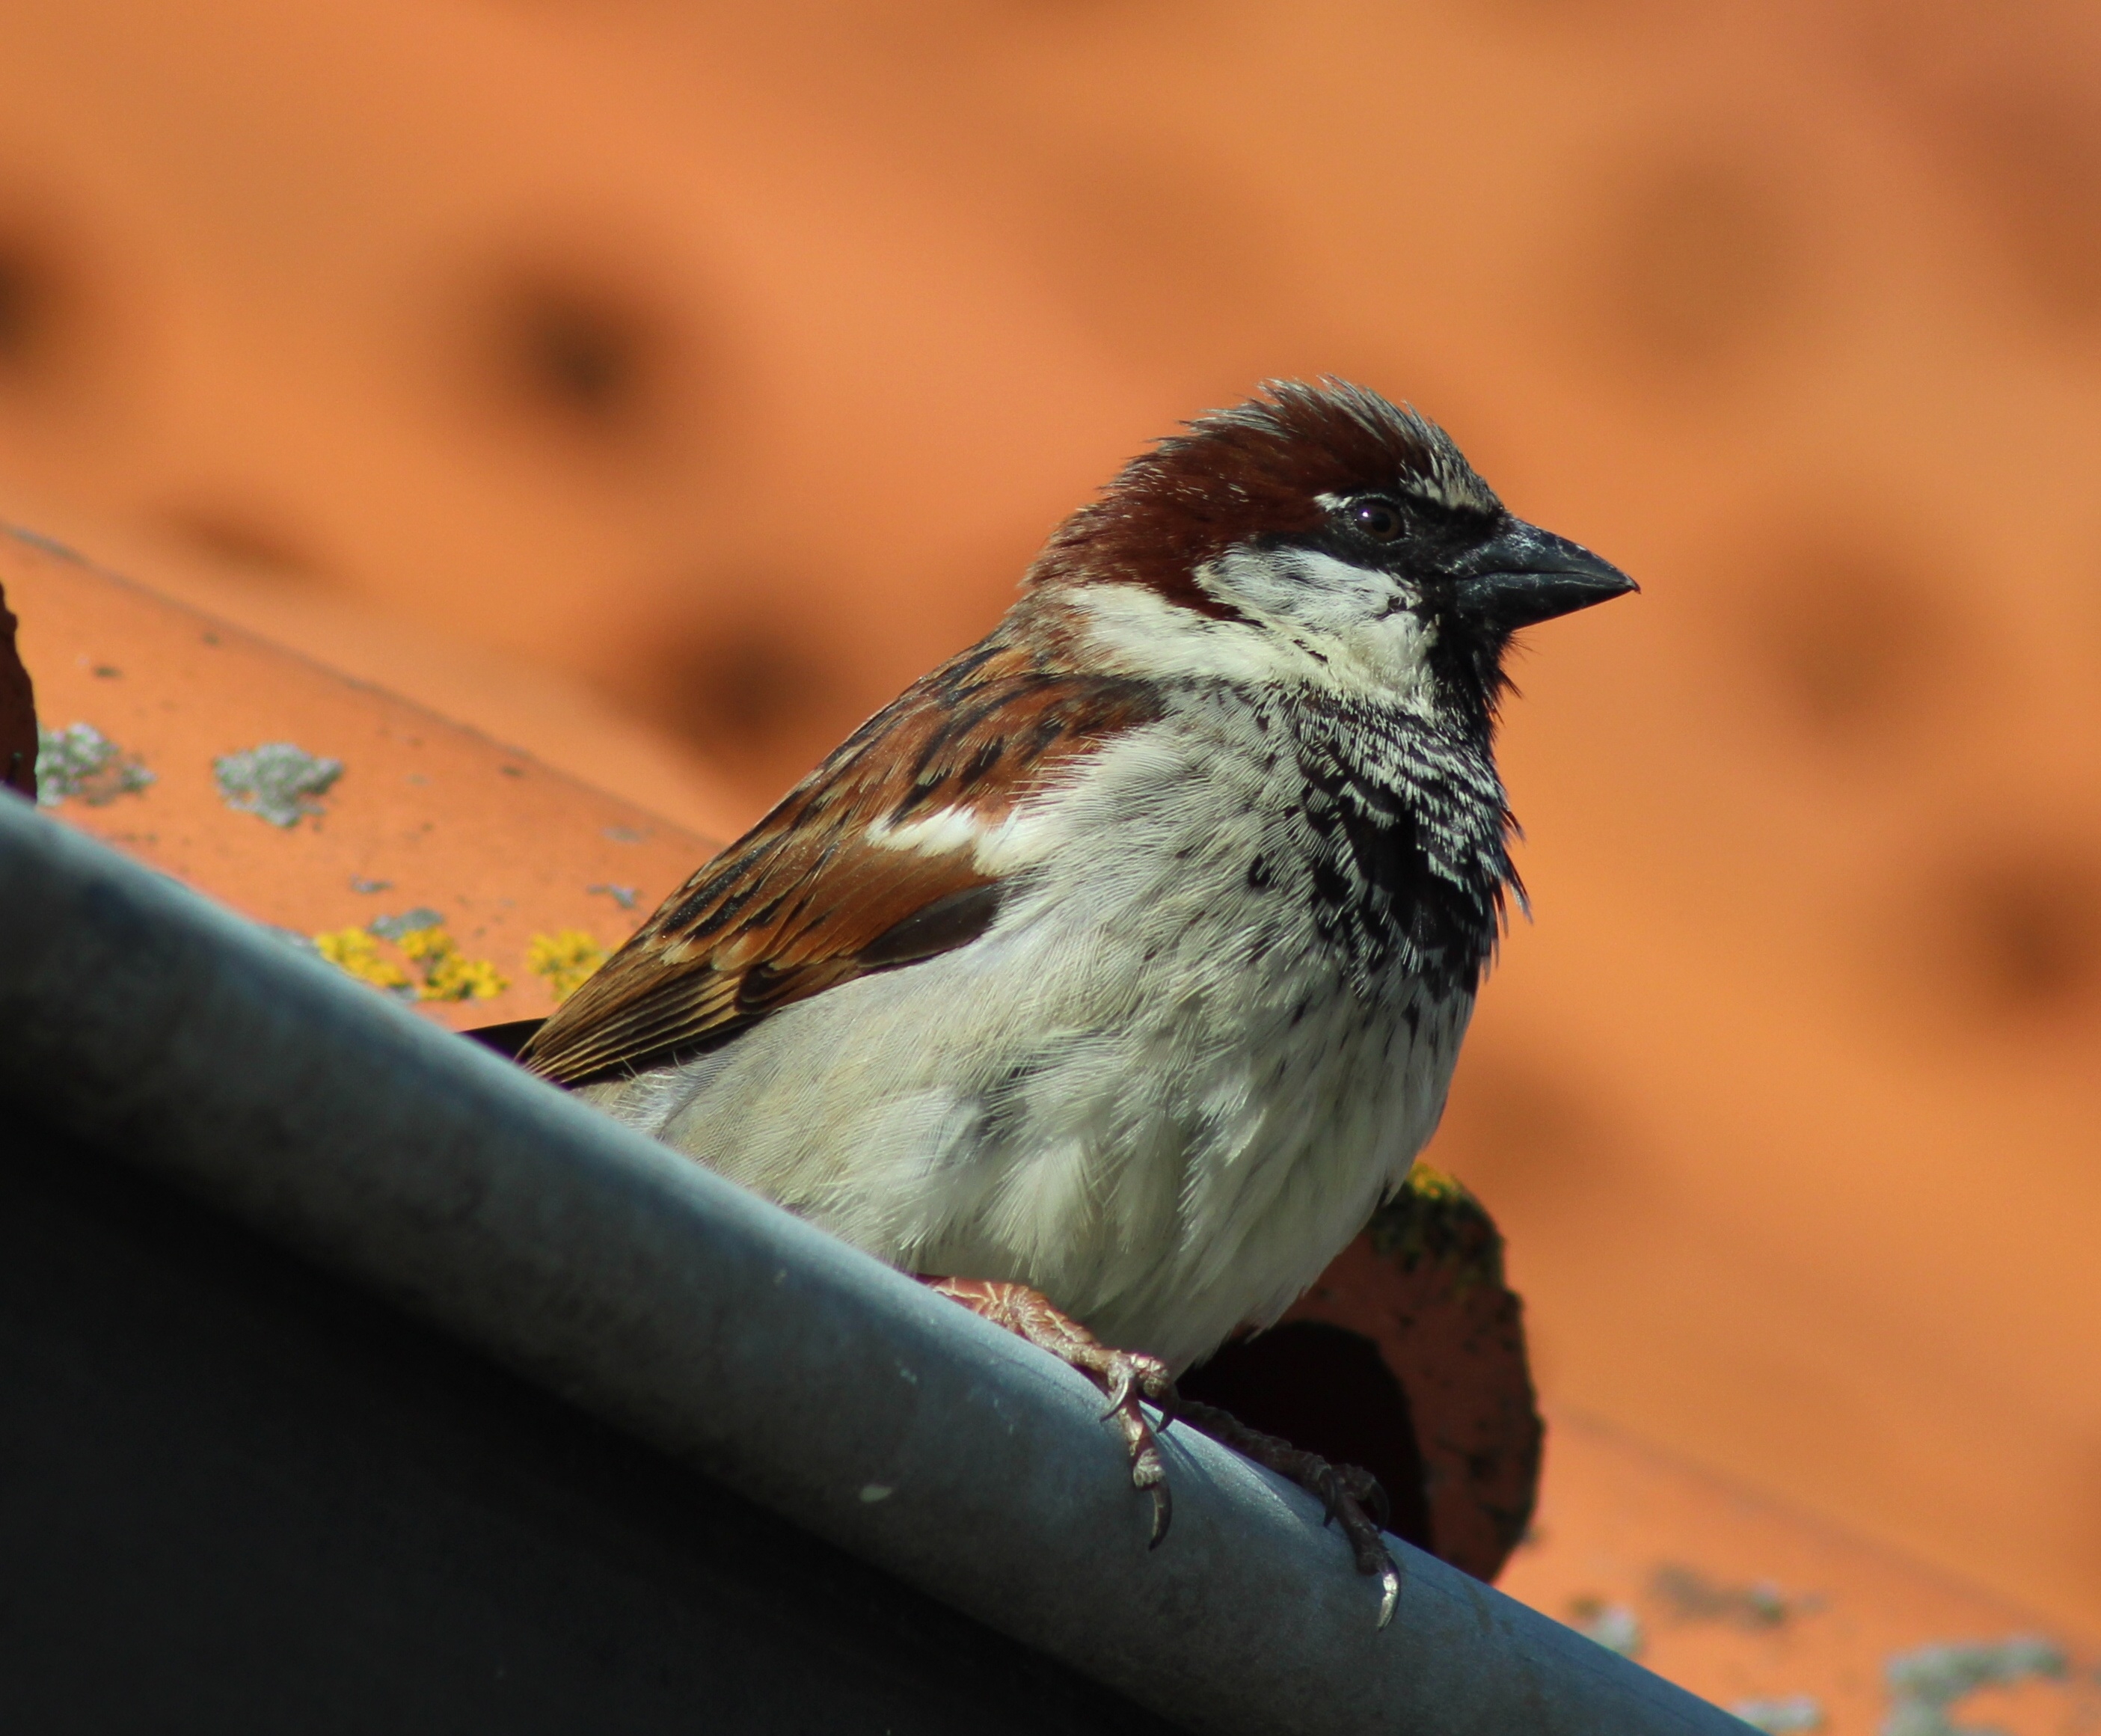 A close-up shot of a sparrow